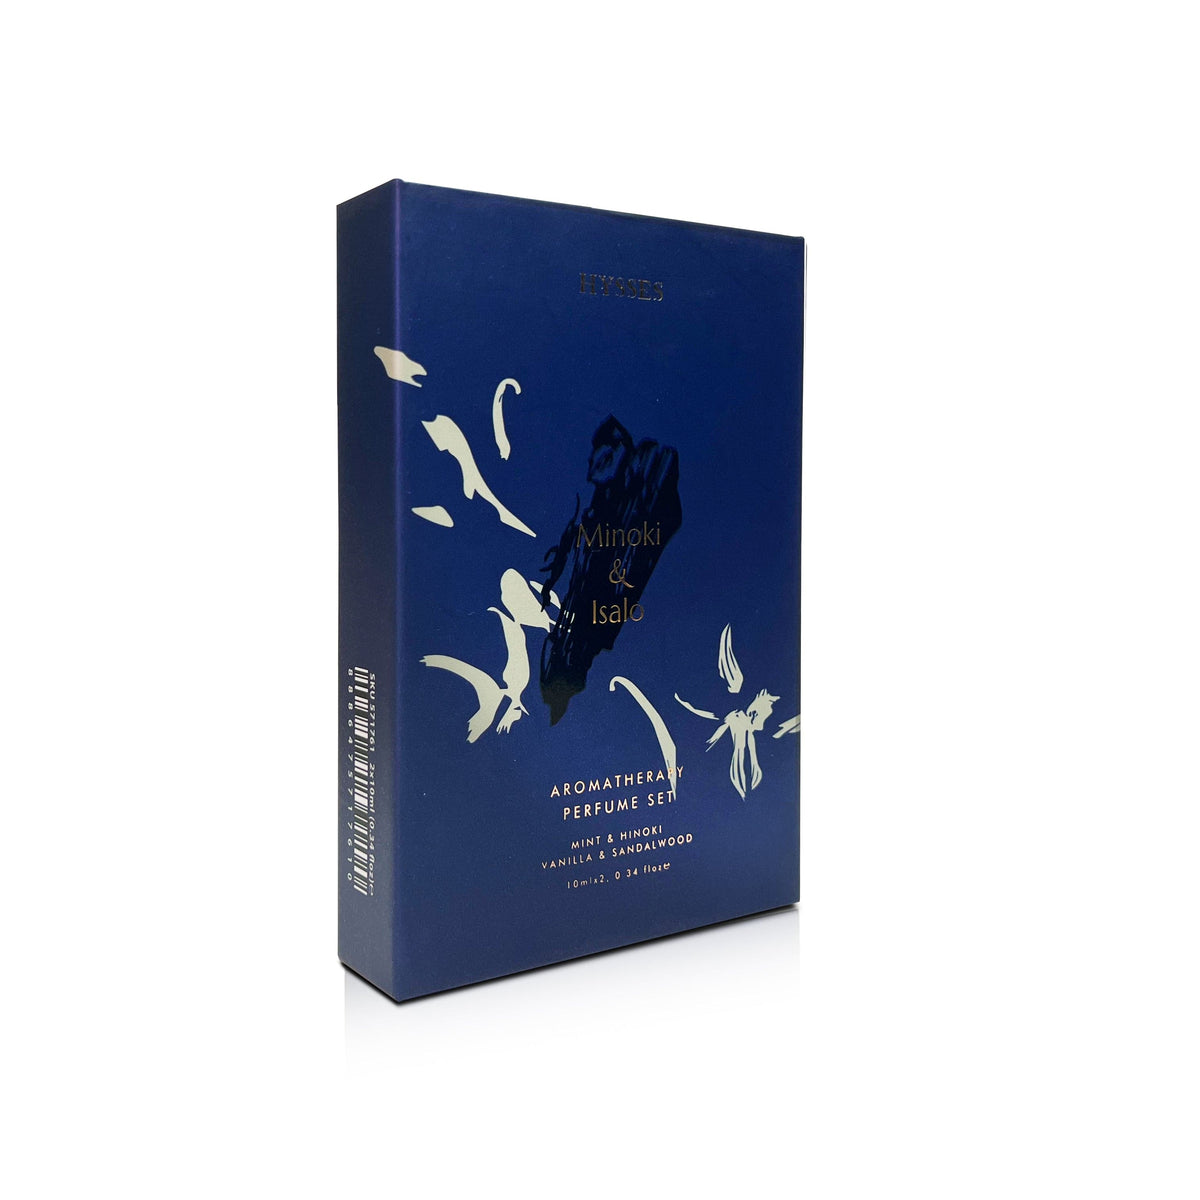 HYSSES Perfume Aroma Perfume Set of 2 (Minoki, Isalo)